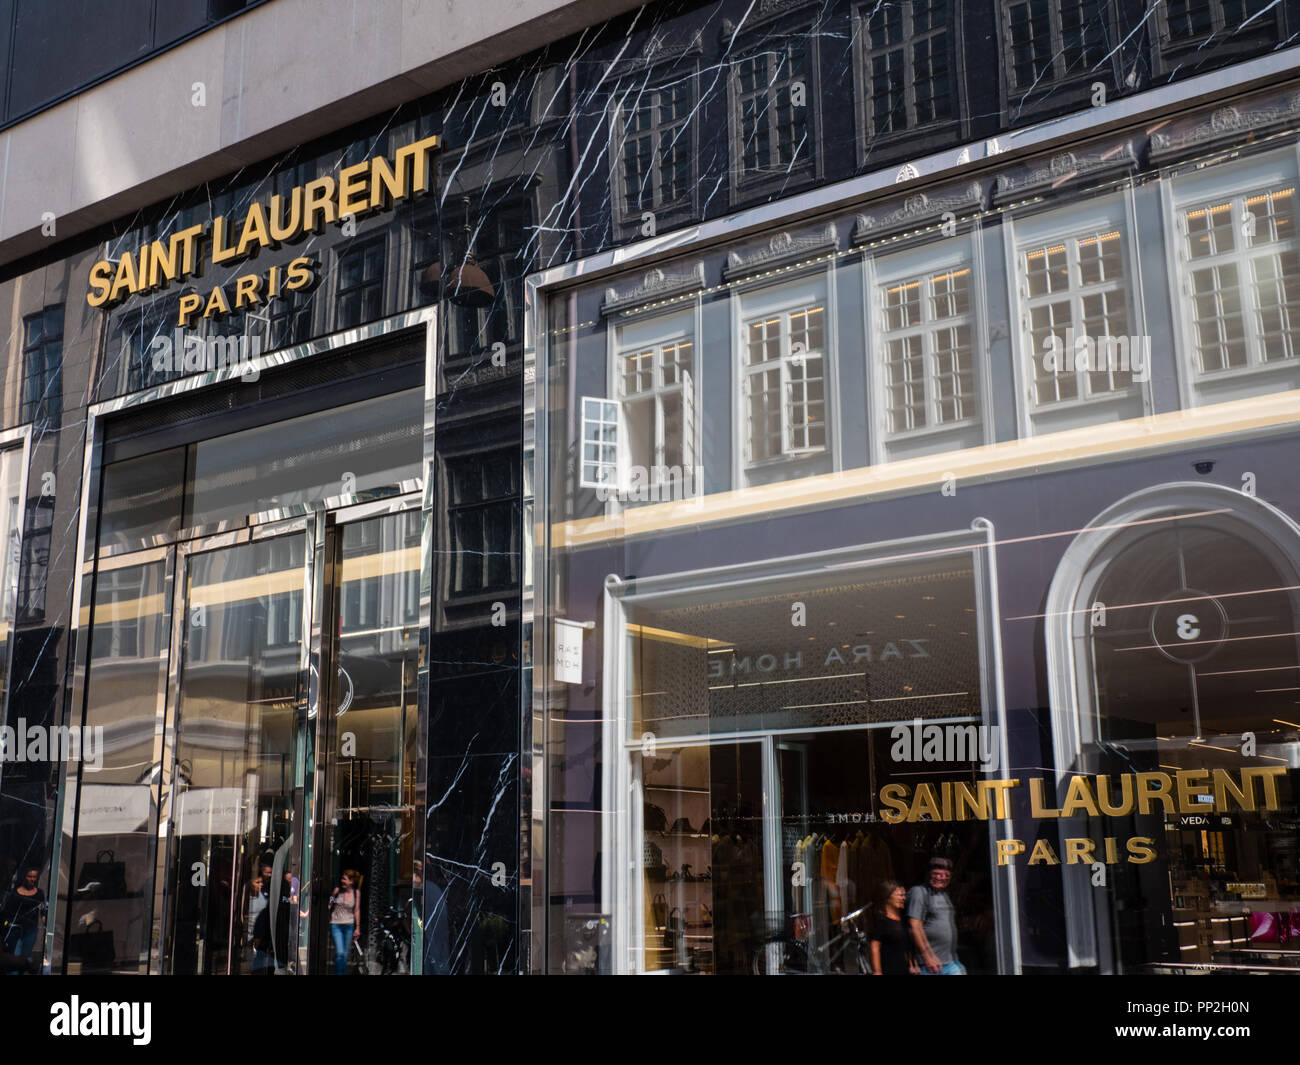 Saint Laurent Paris, Luxury Shop, Copenhagen, Zealand, Denmark, Europe